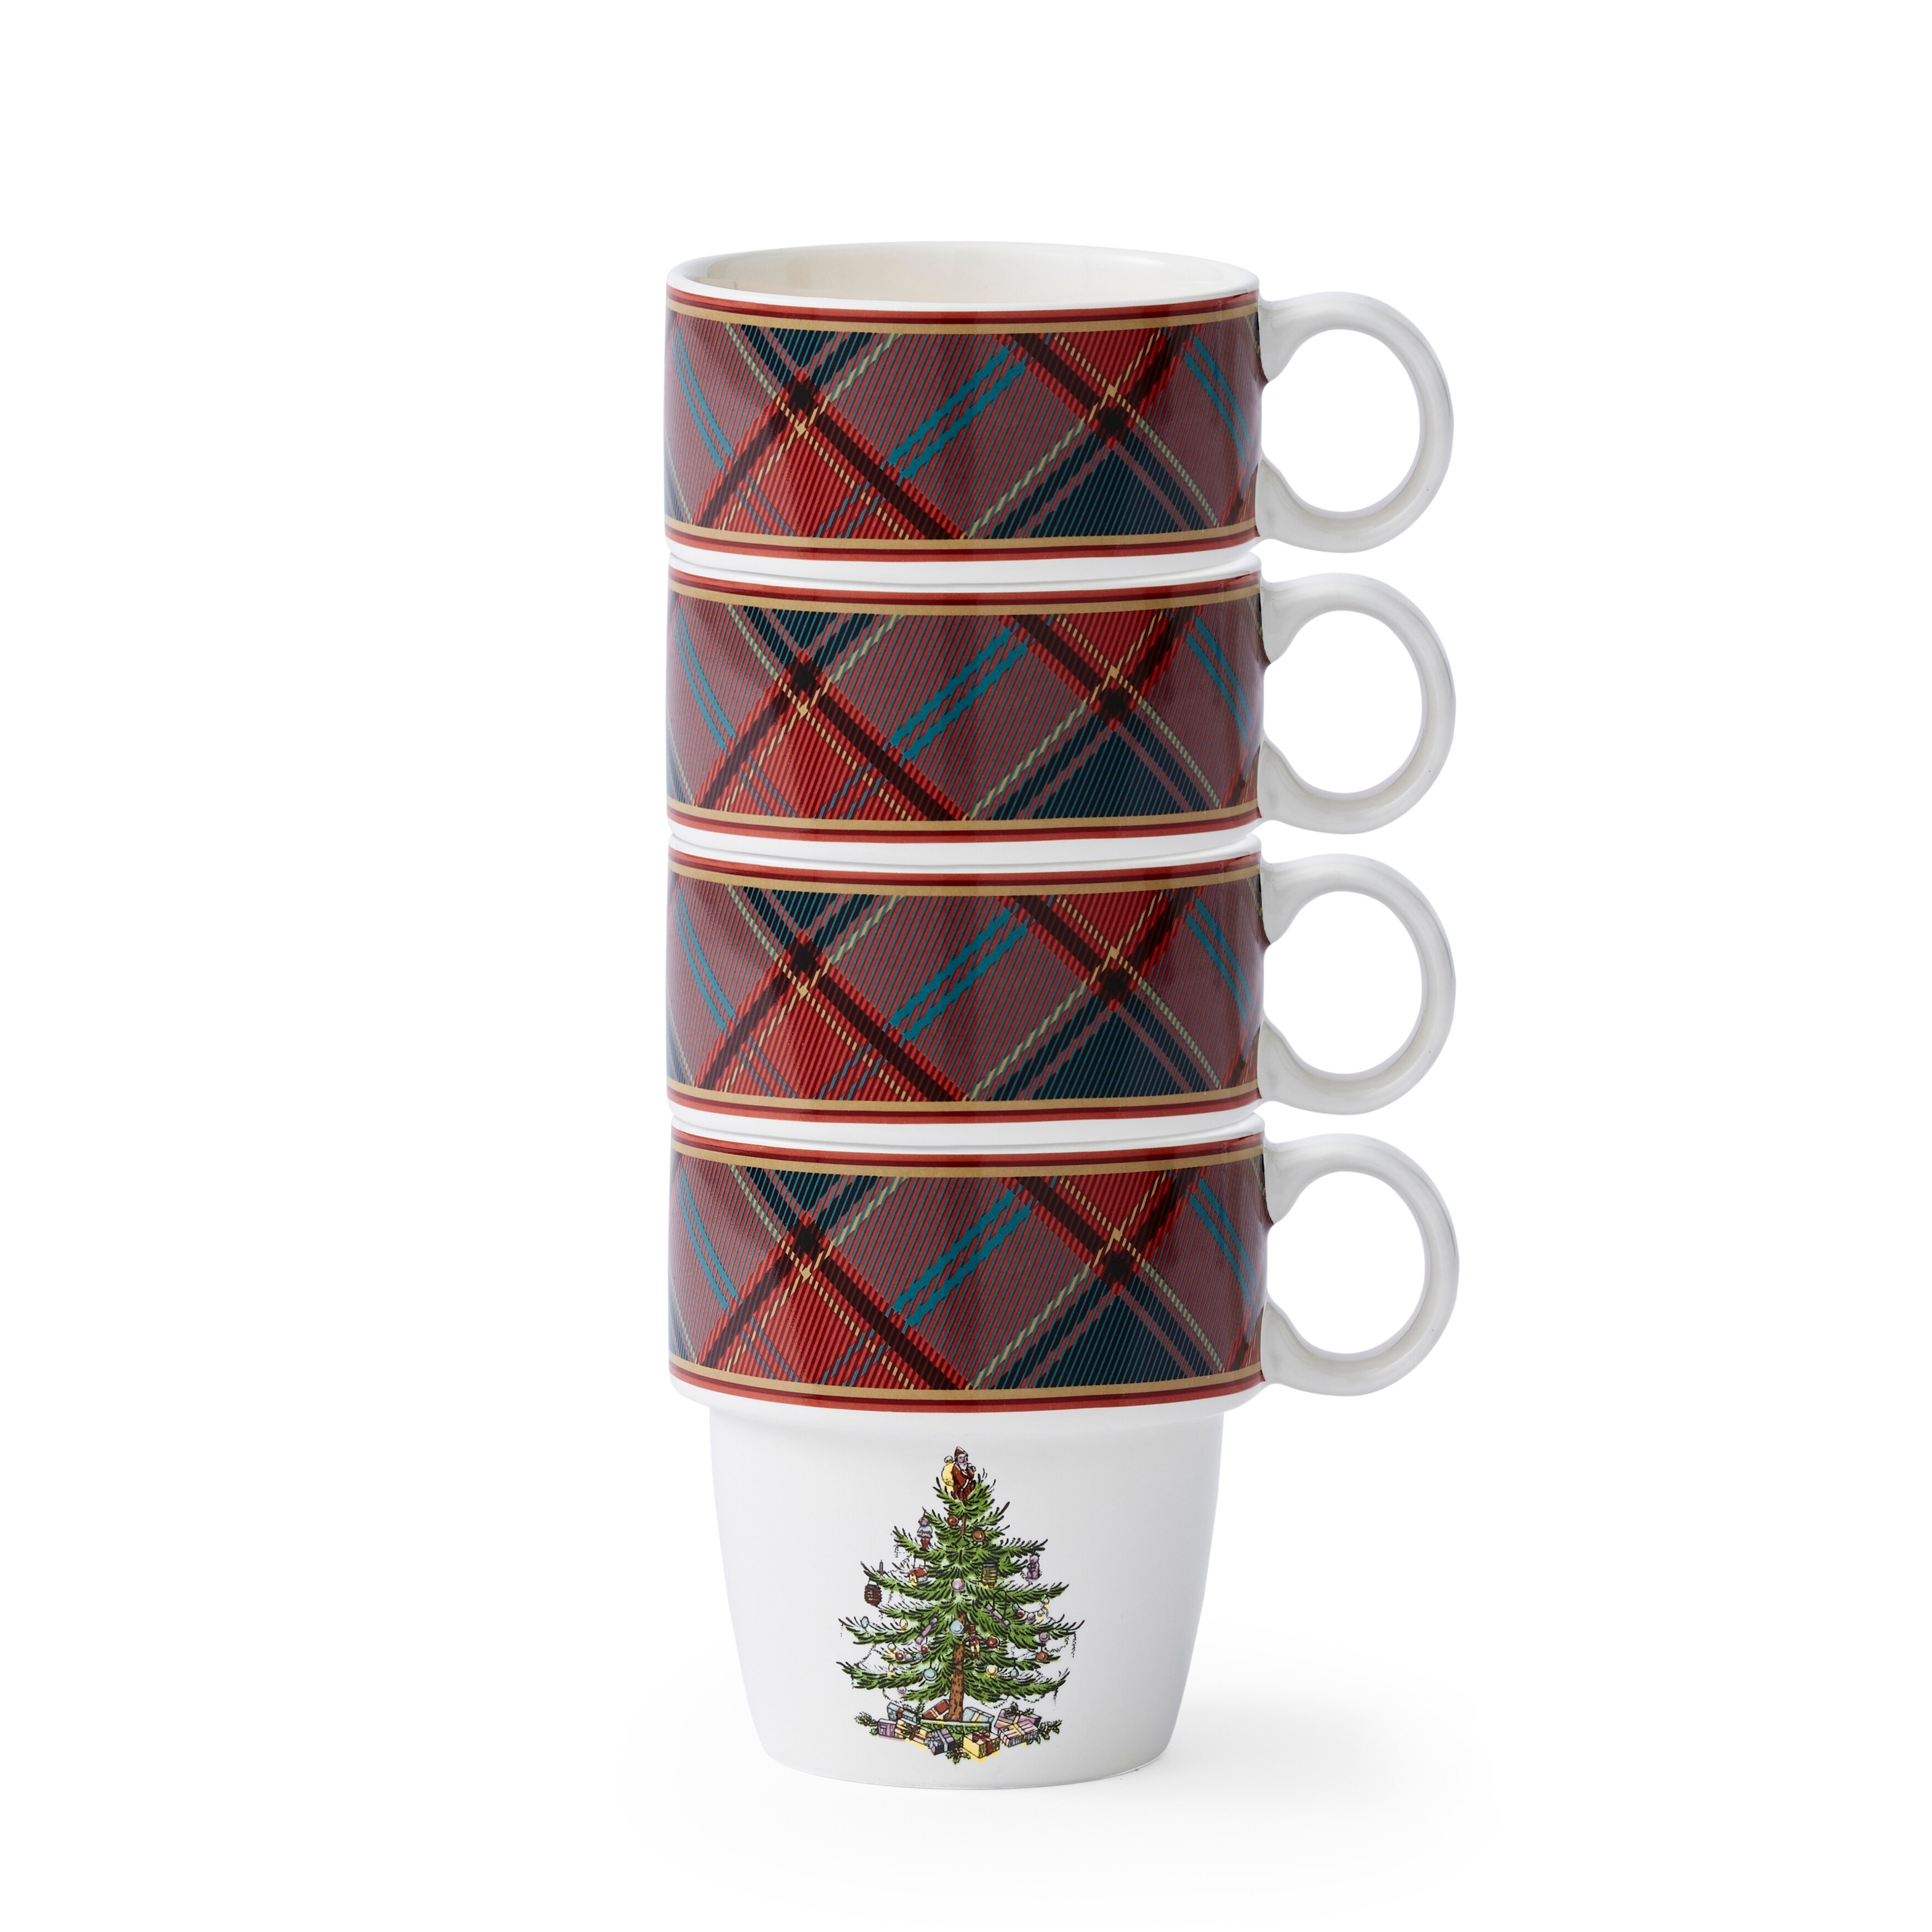 https://ak1.ostkcdn.com/images/products/is/images/direct/3df22eb431c8bb21967458b4b781b65a15bfb126/Spode-Christmas-Tree-Tartan-Stacking-Mugs-Set-of-4.jpg